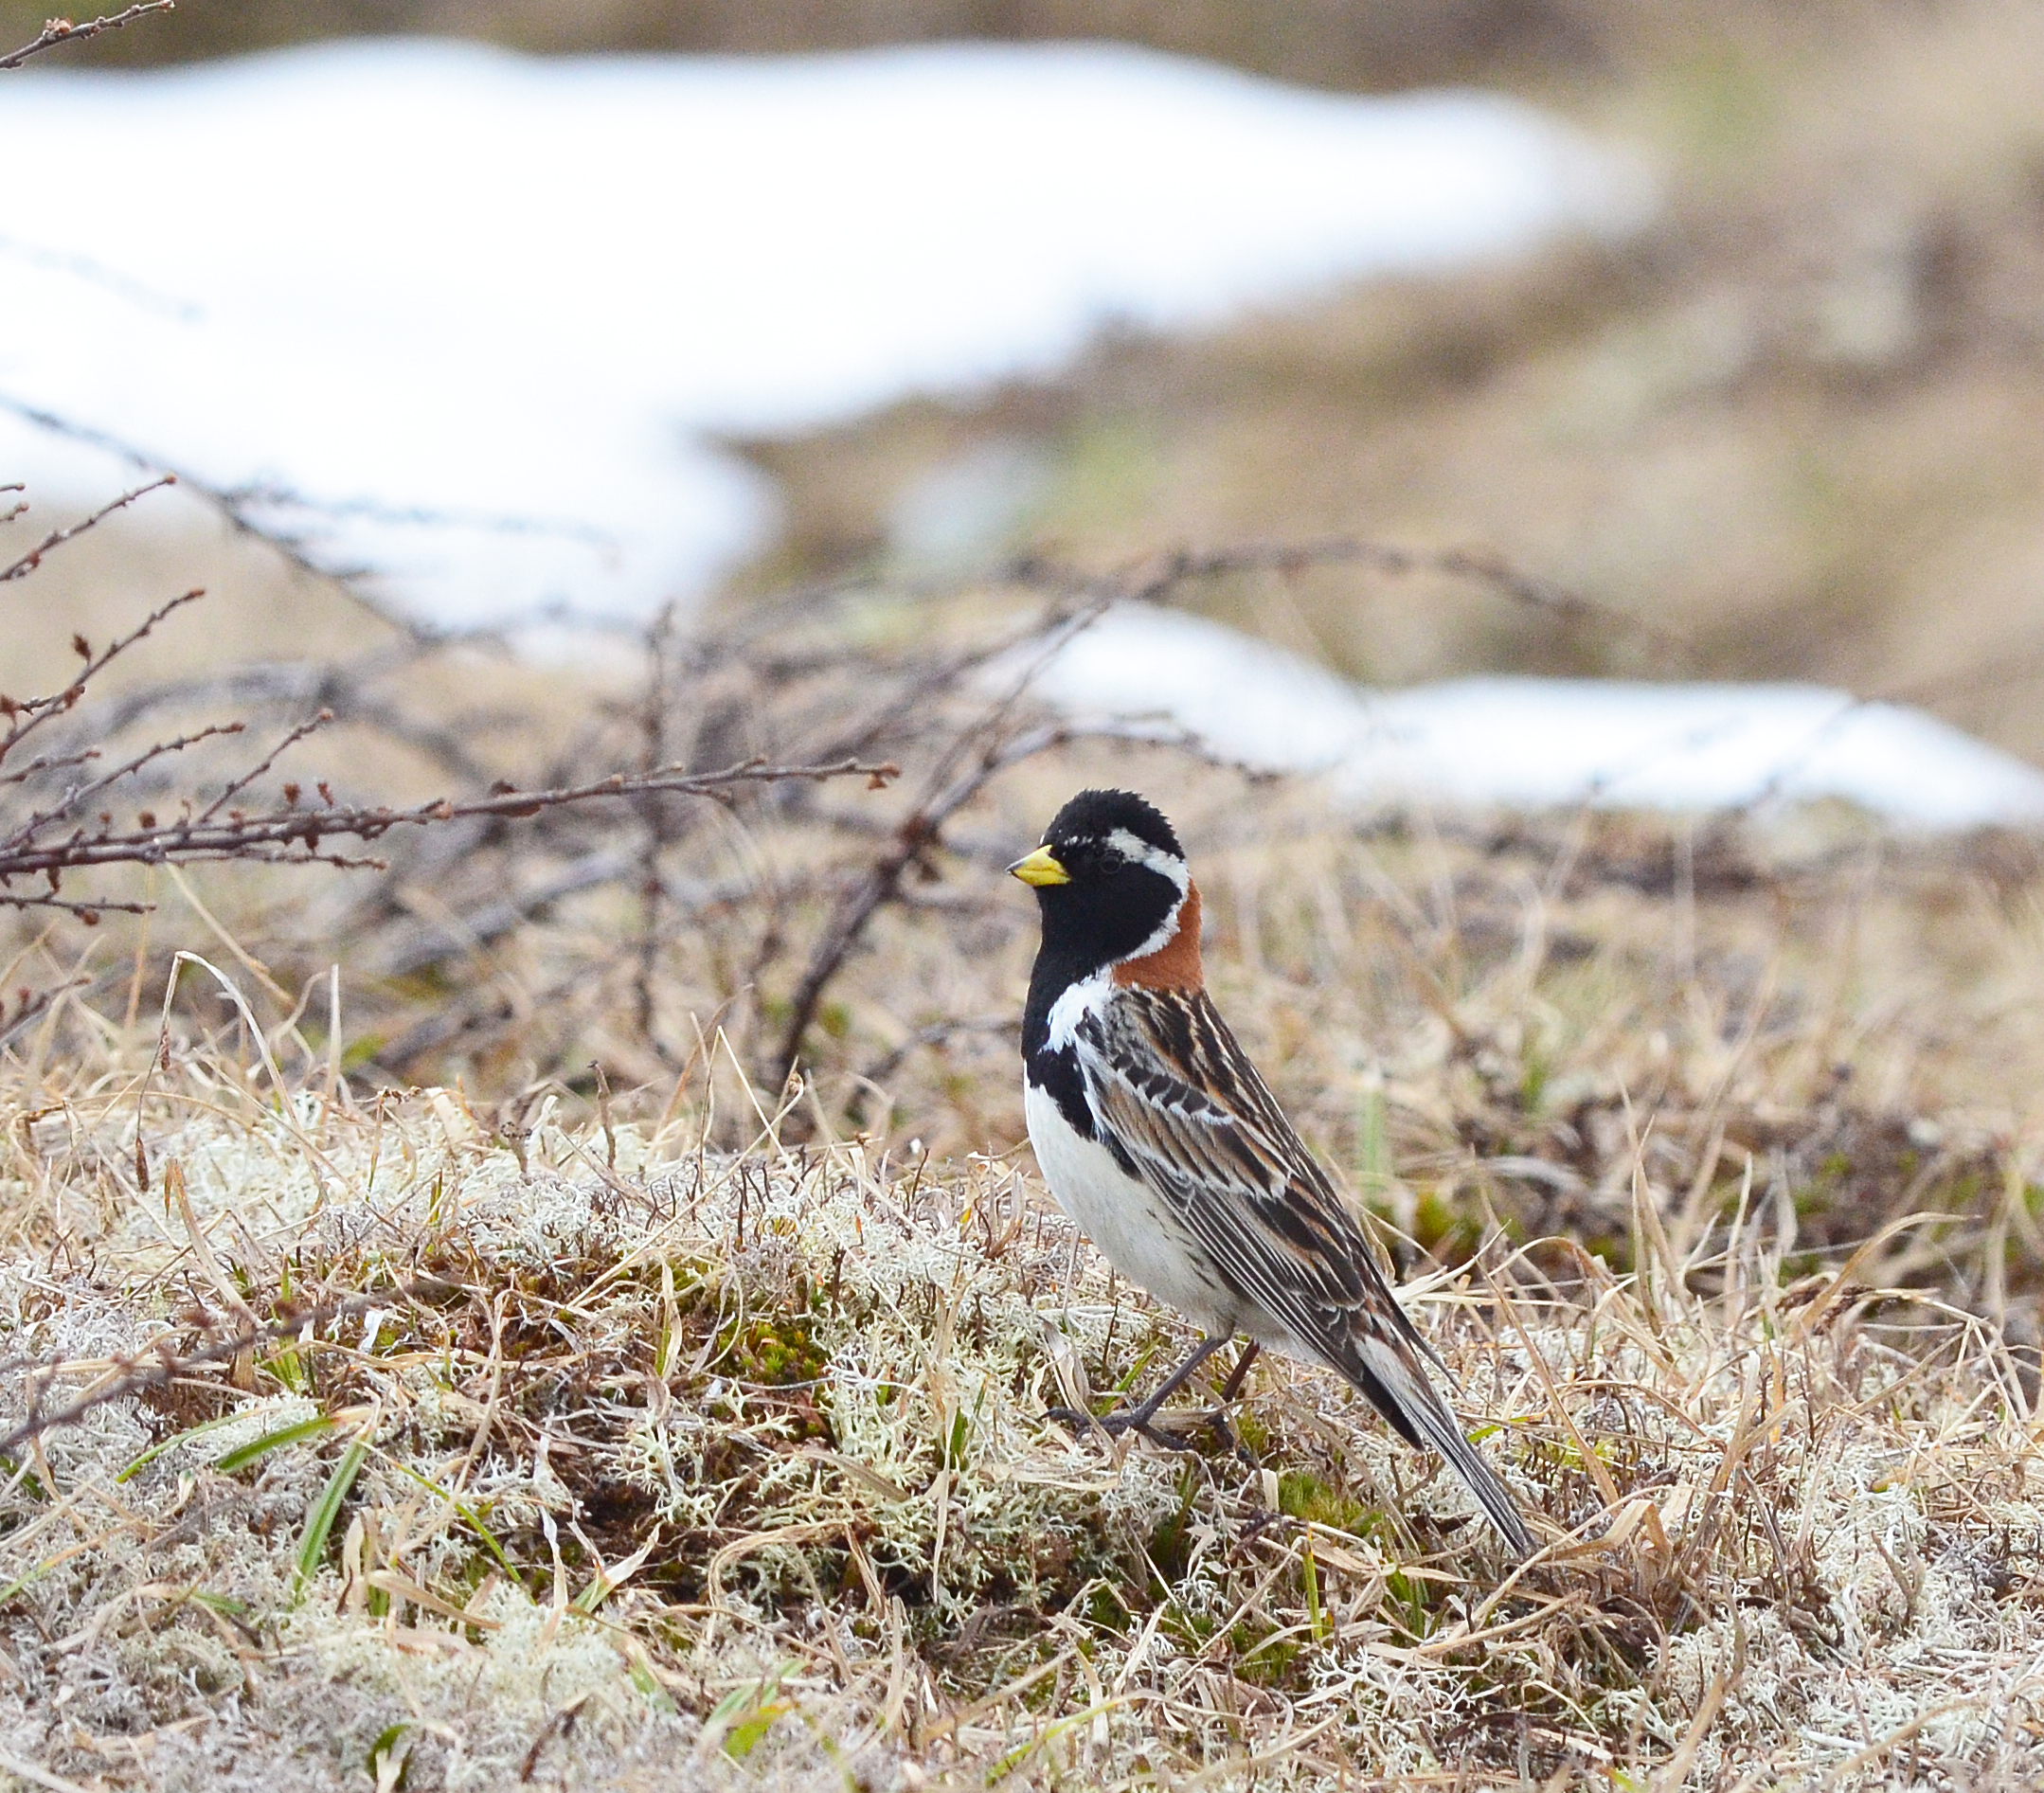 Male Lapland Longspur in its breeding habitat. Photo: Vegard B. Fjeldheim.